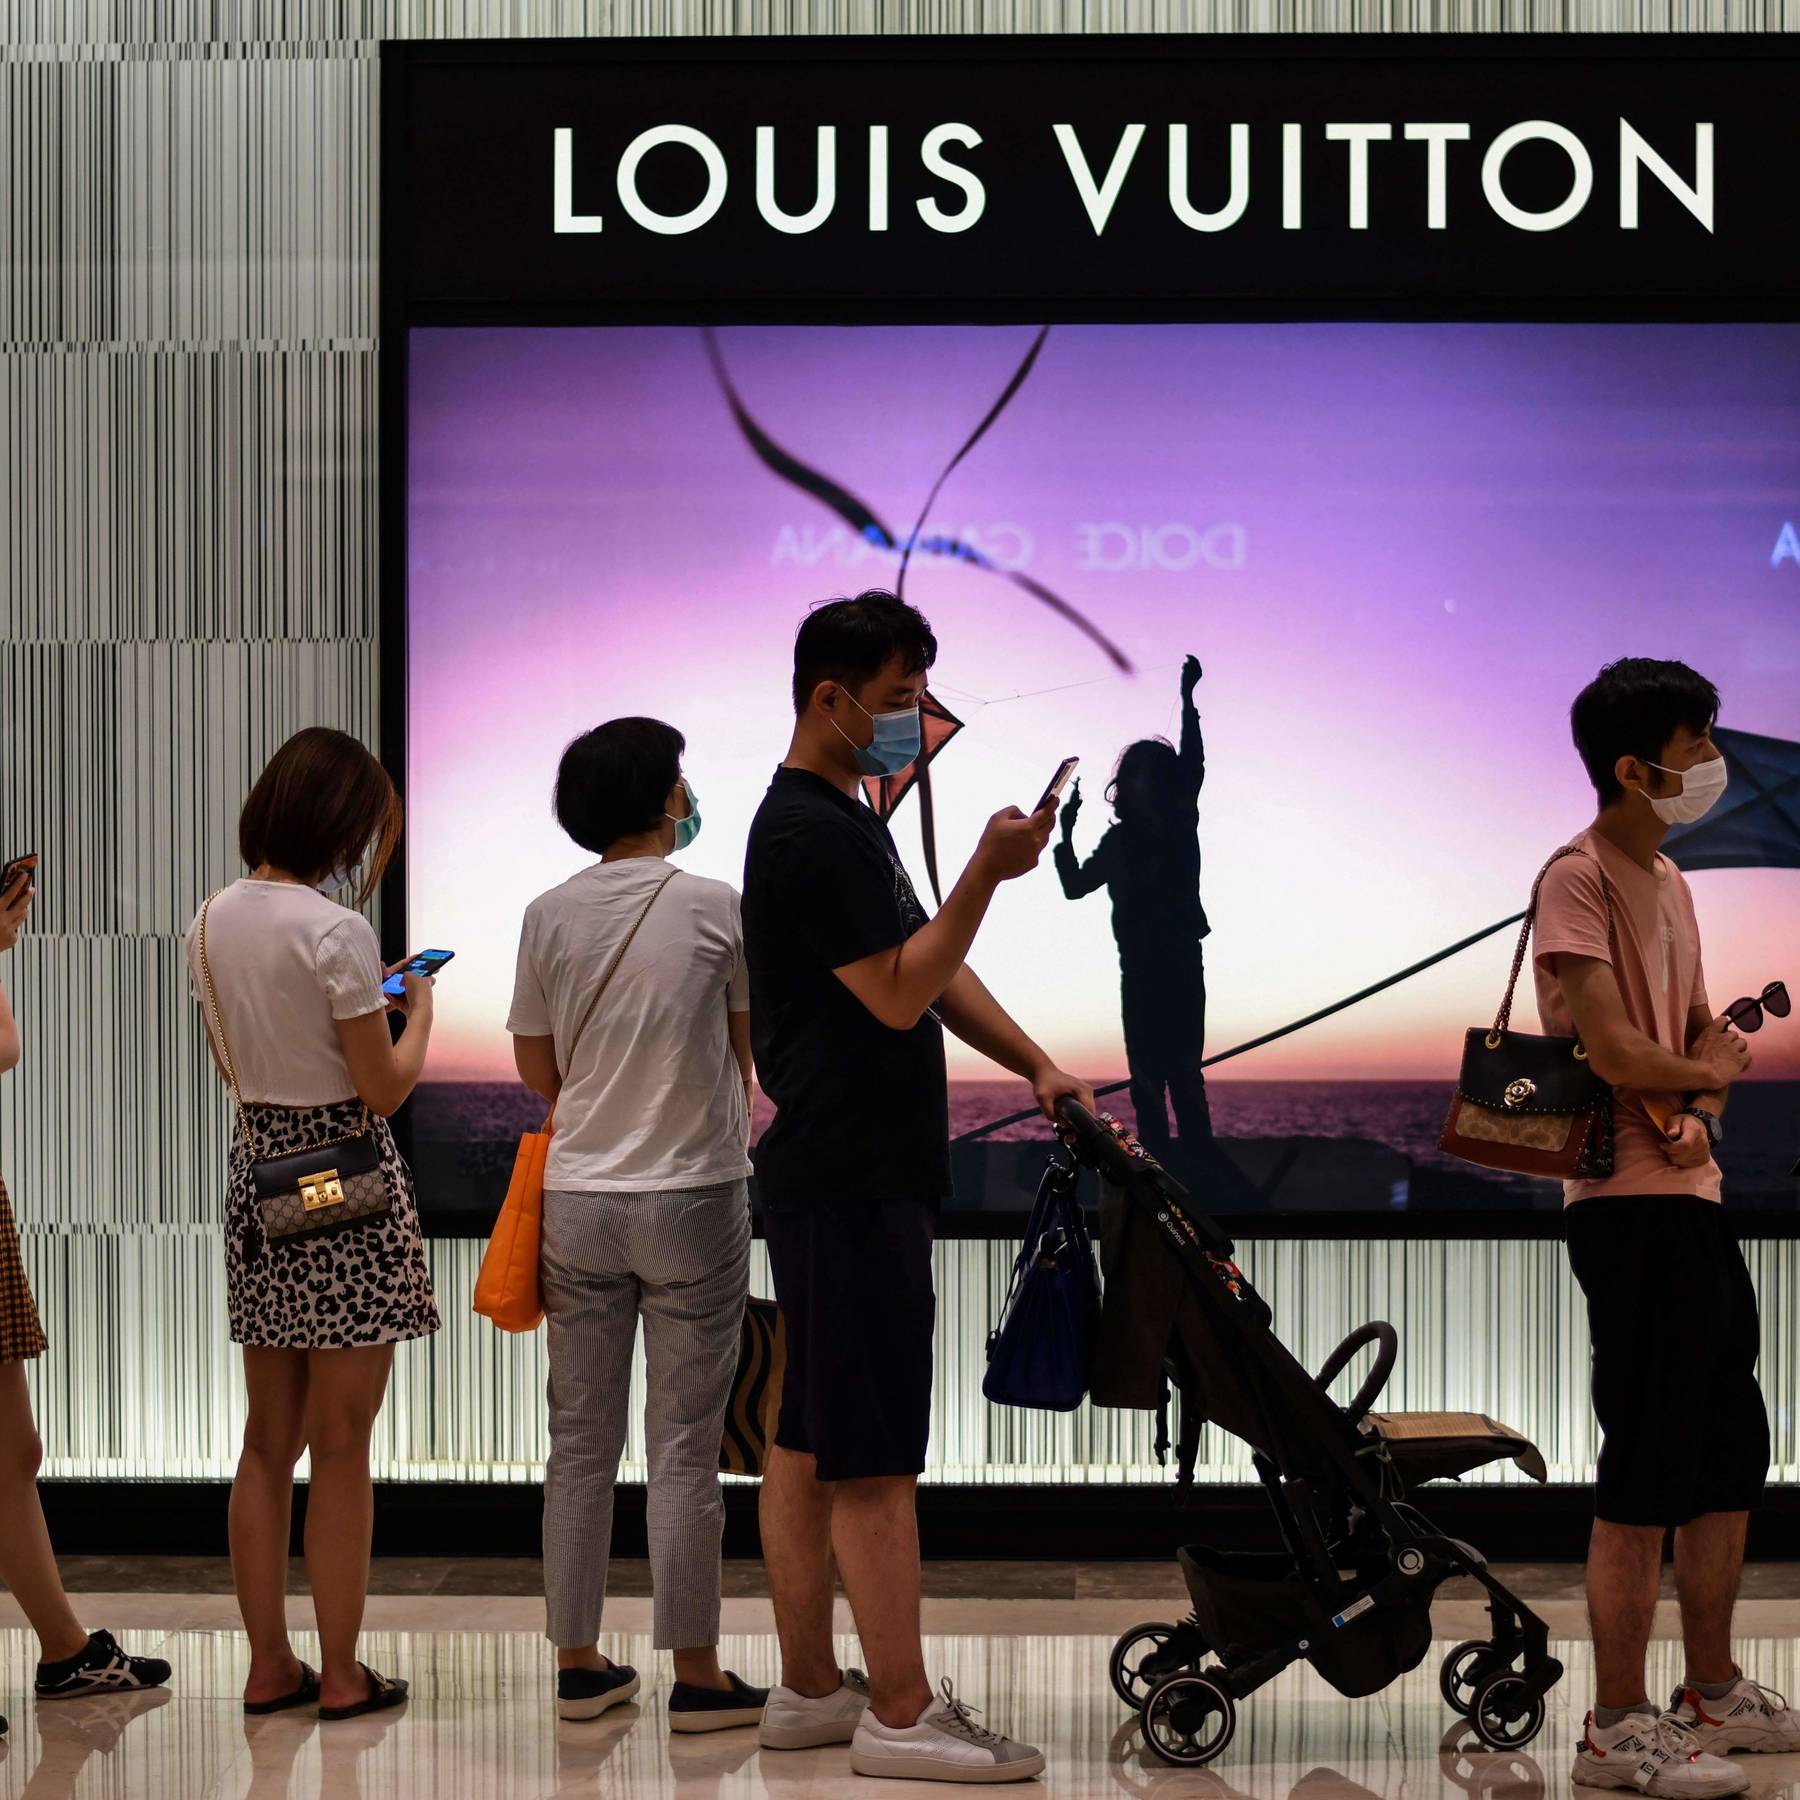 LVMH: Luxury giant's sales soar despite China losses - BBC News